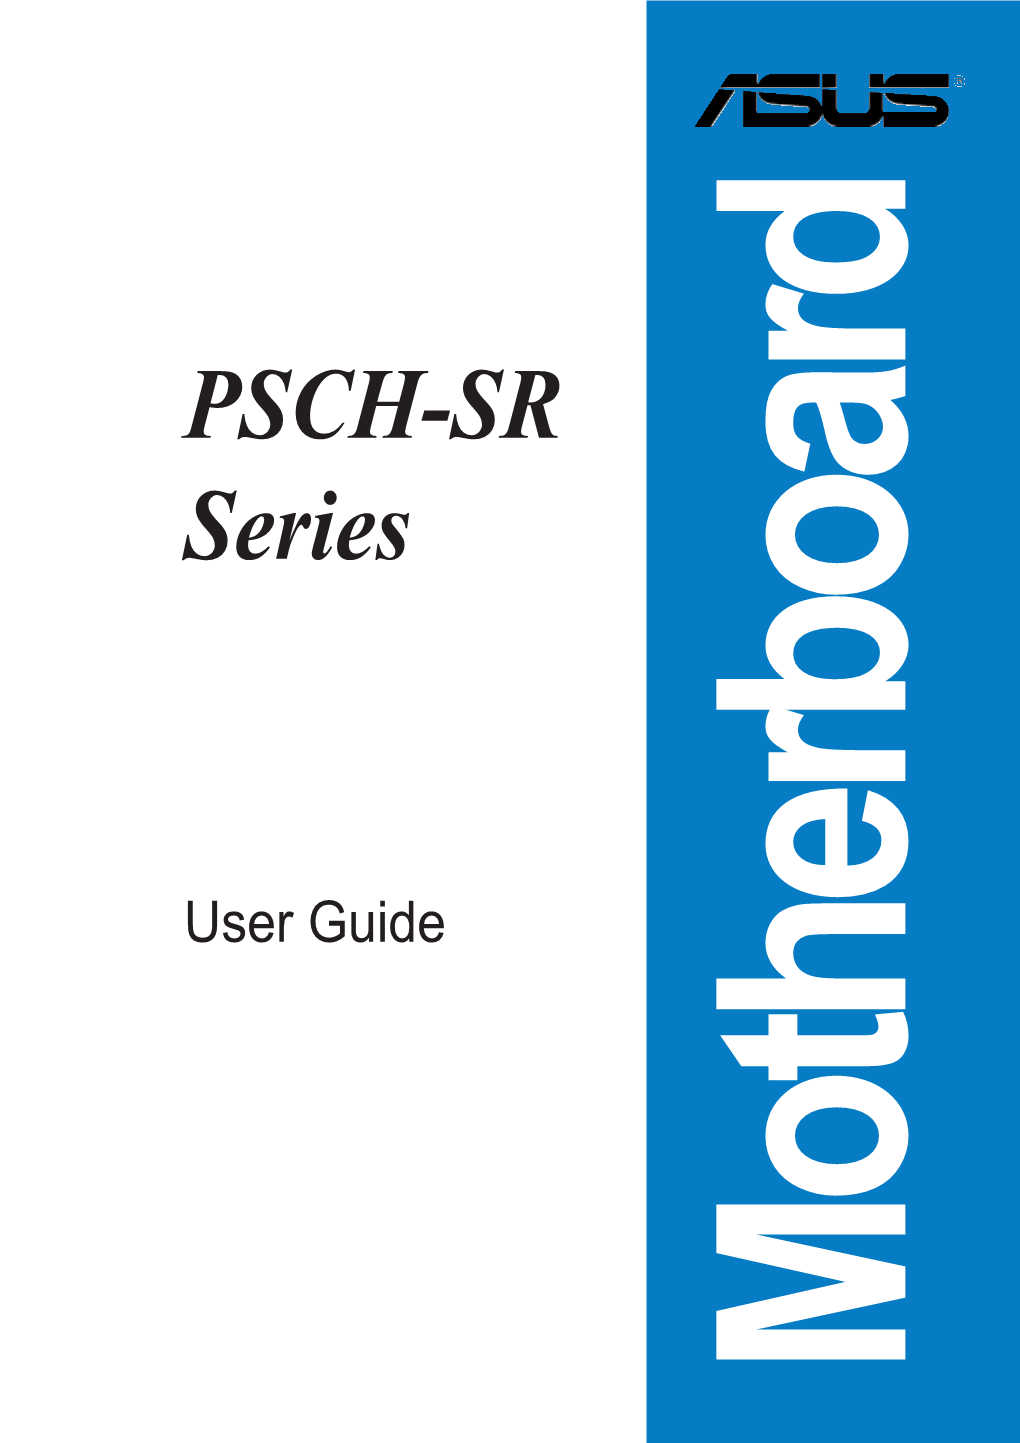 Motherboard PSCH-SR Series